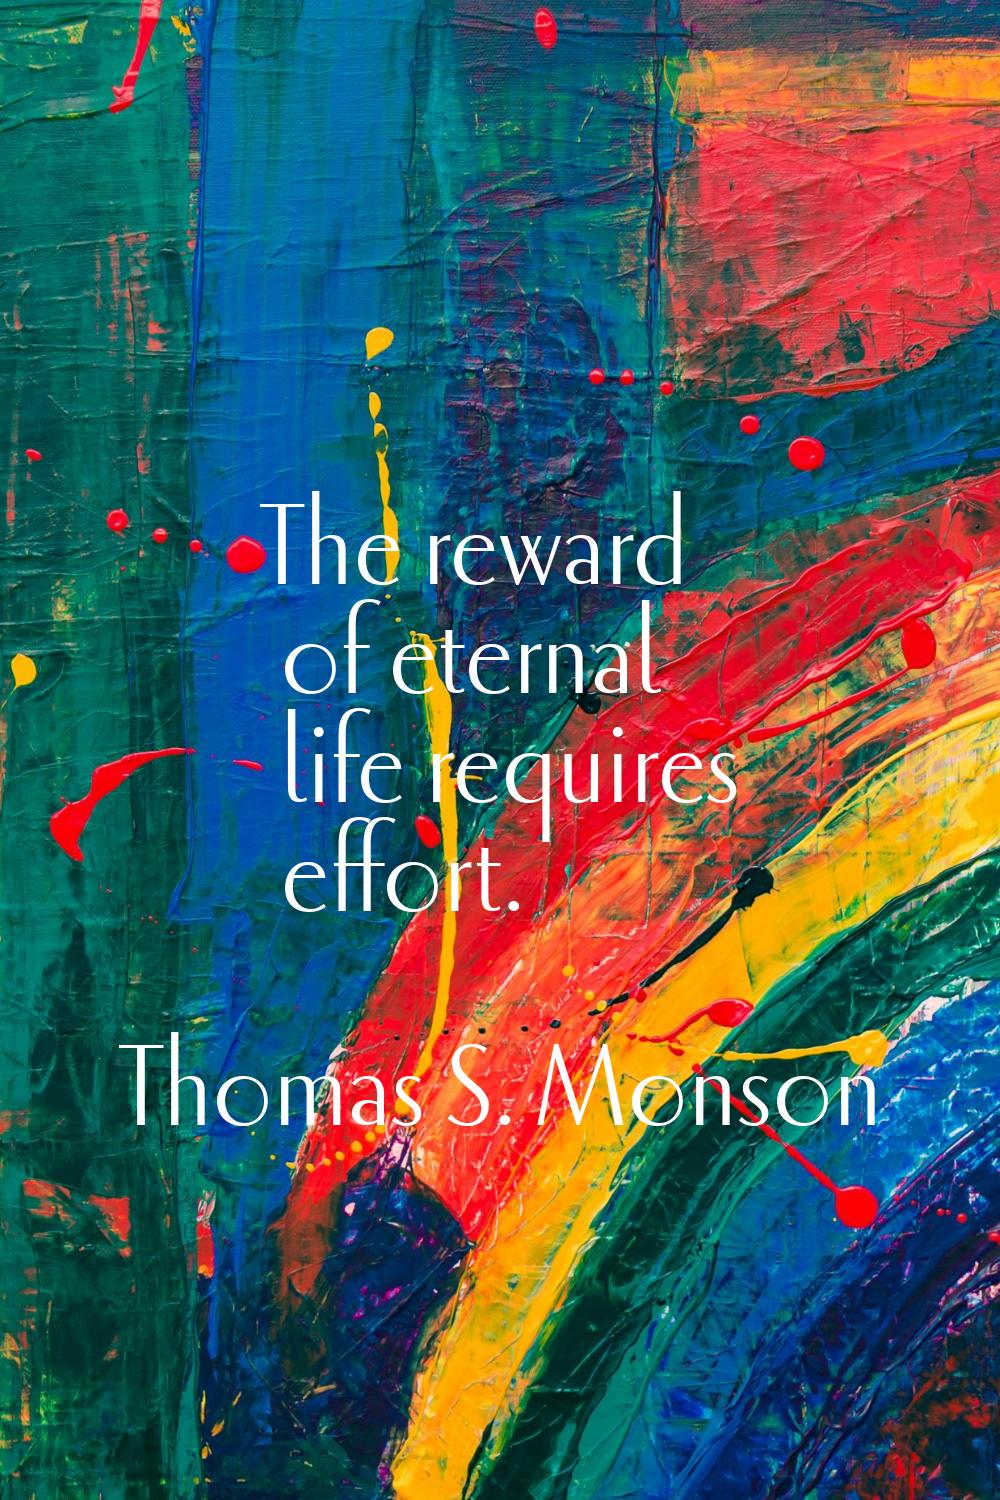 The reward of eternal life requires effort.